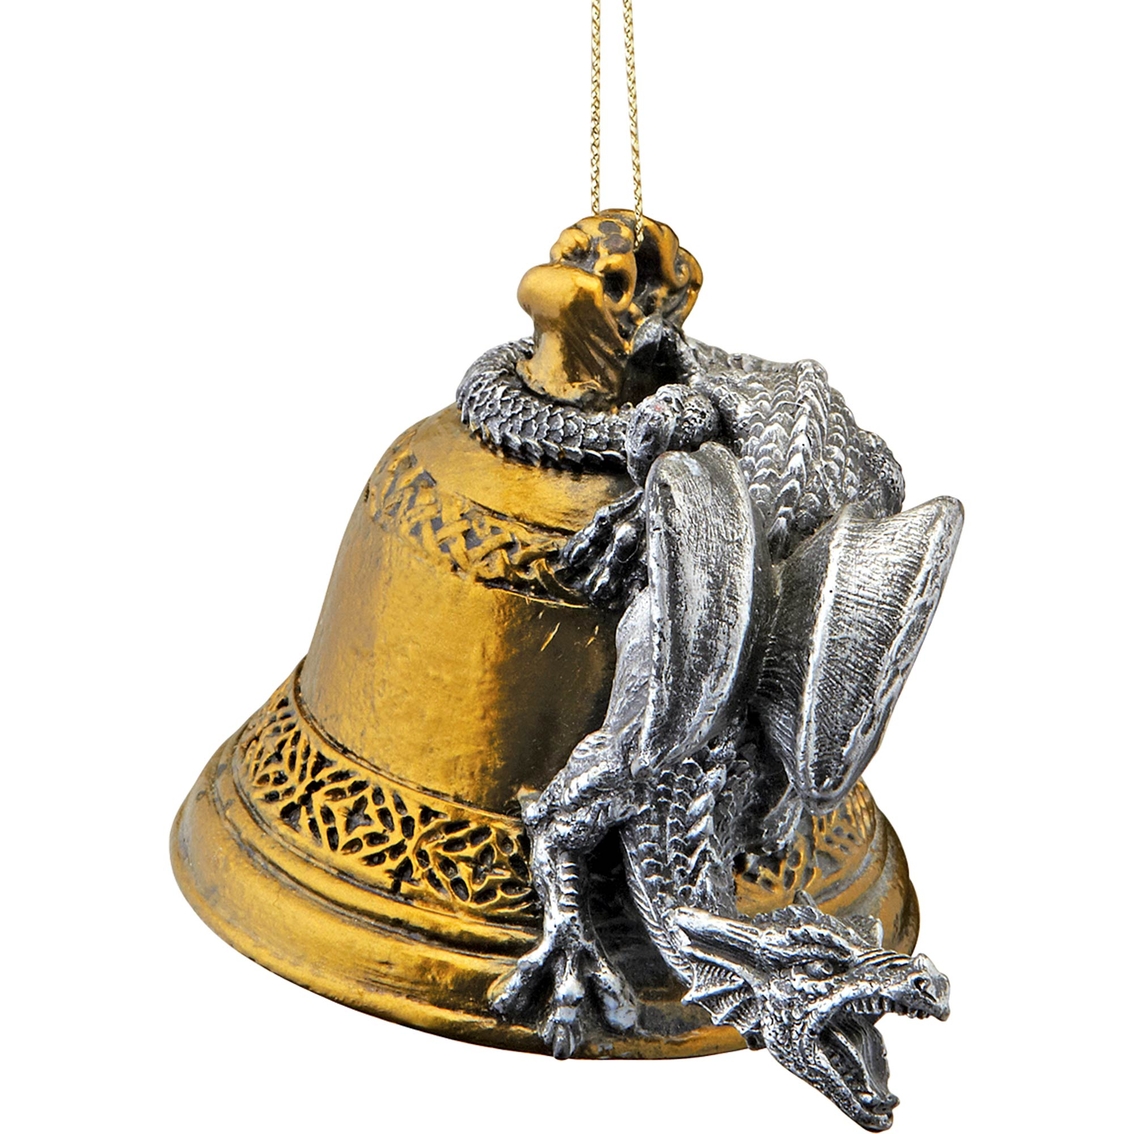 Design Toscano Humdinger the Bell Ringer Gothic Dragon 2011 Holiday Ornament - Image 2 of 2